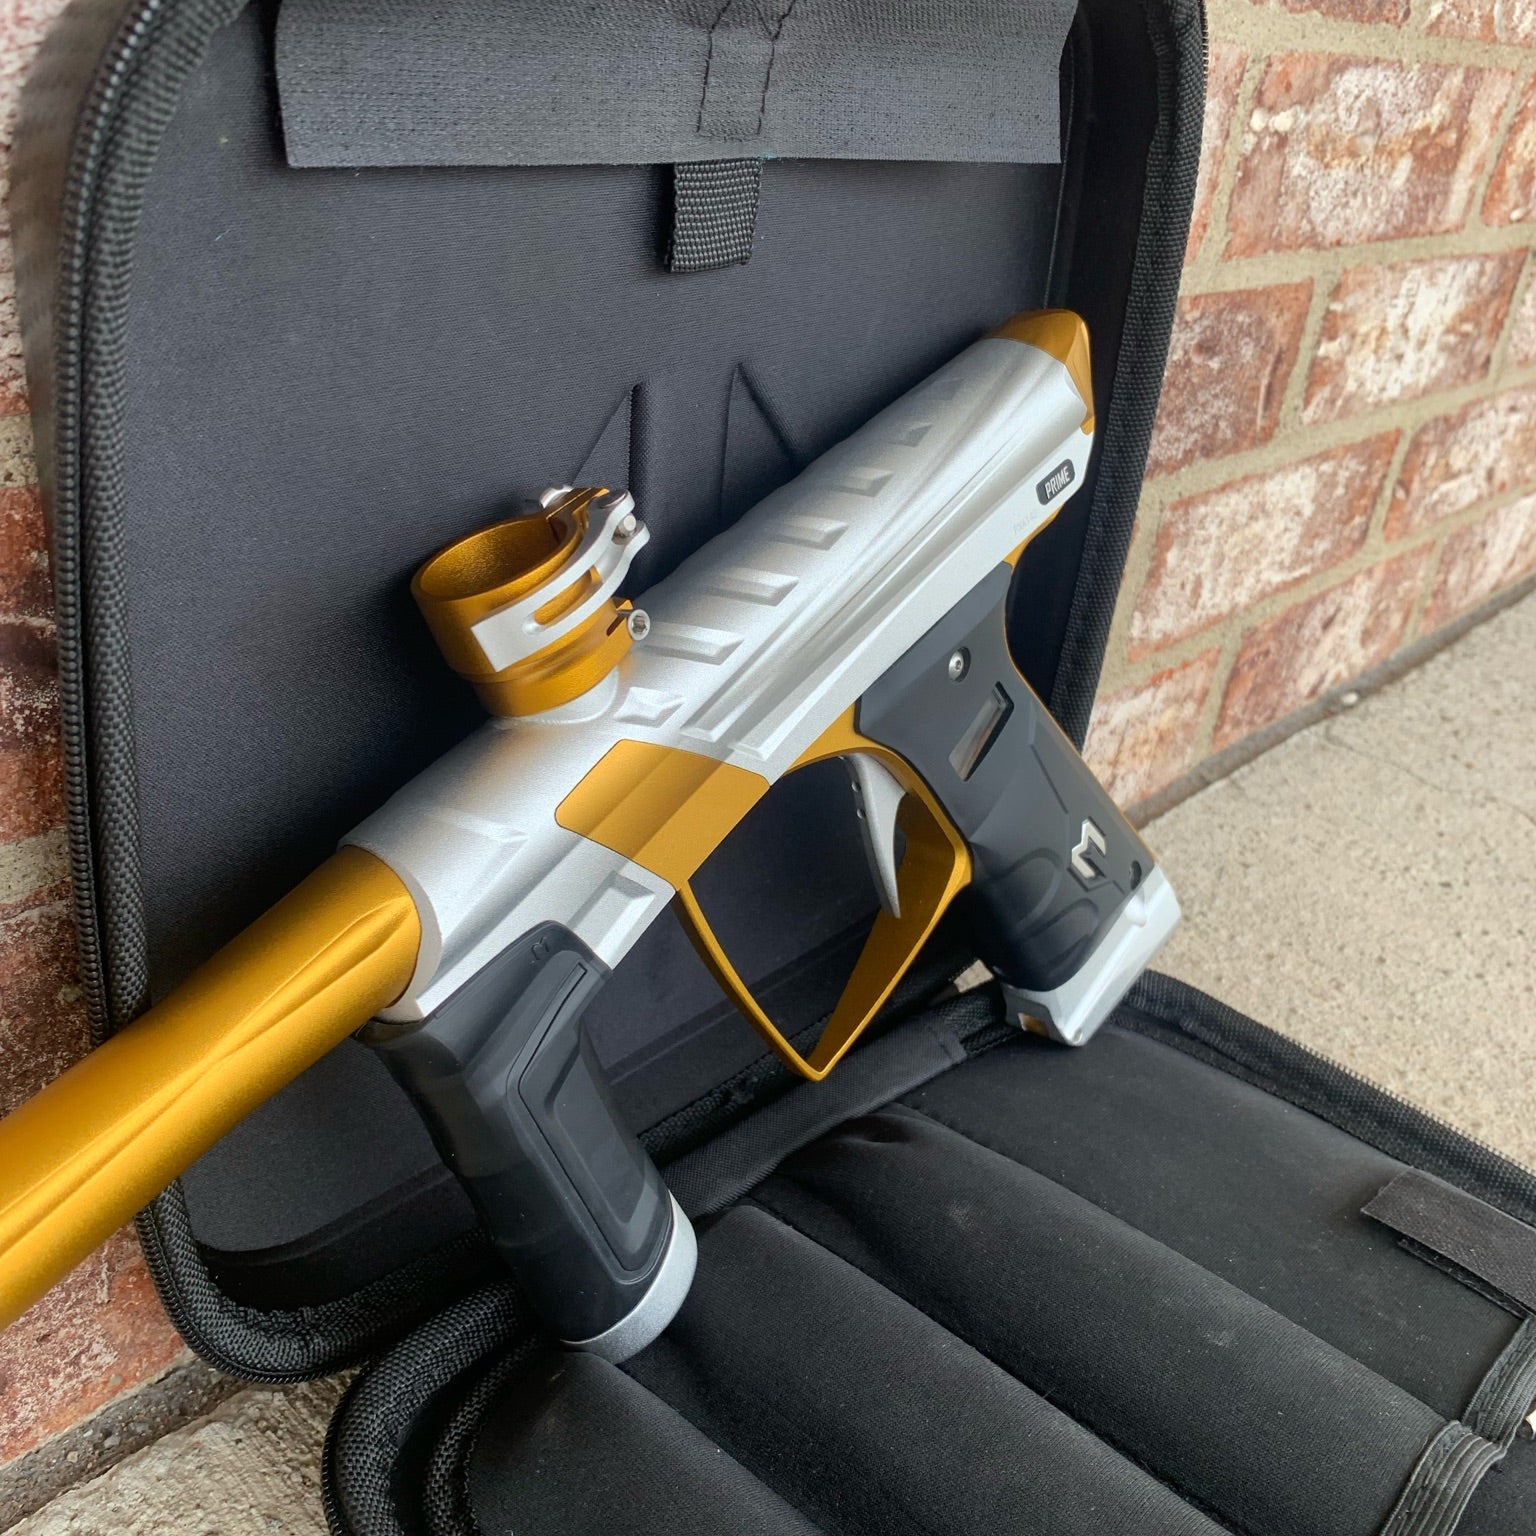 Used MacDev Prime XTS Paintball Gun - Zues